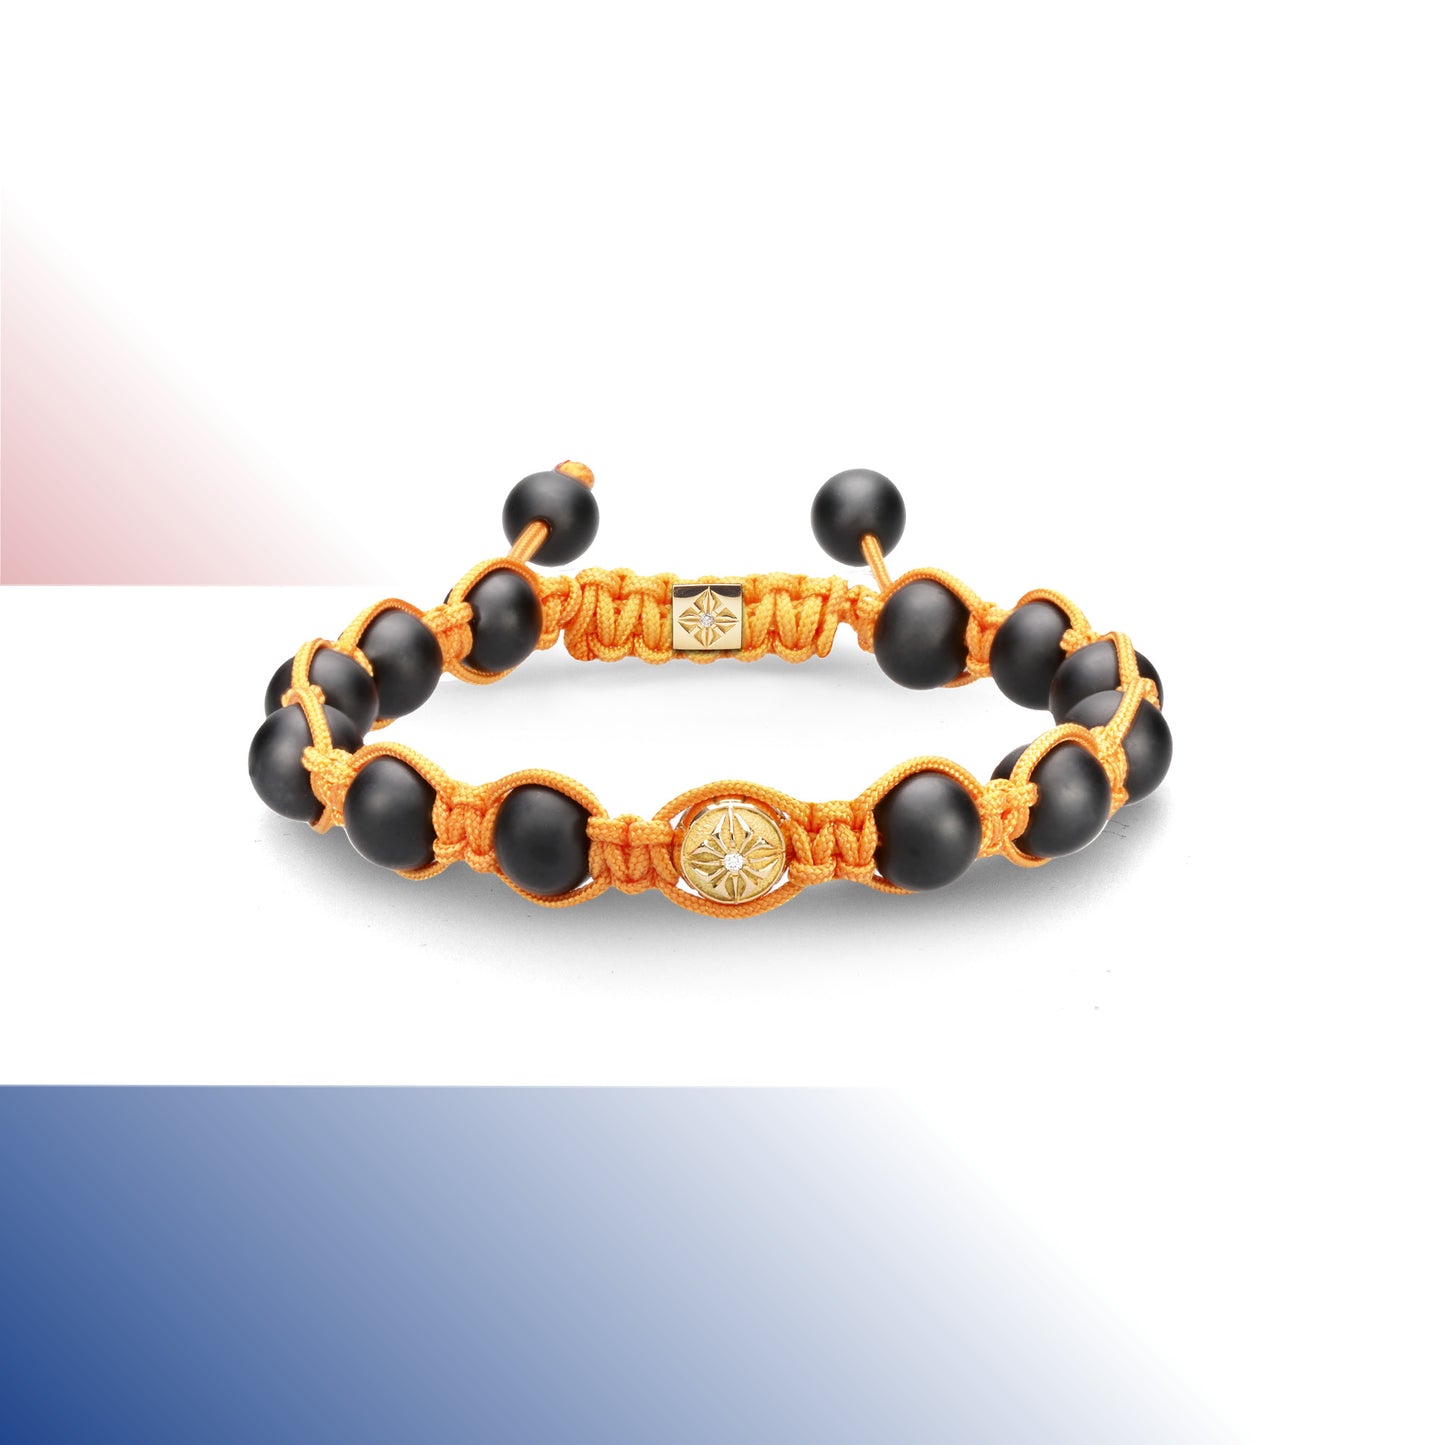 "Netherlands" - Braided Bracelet